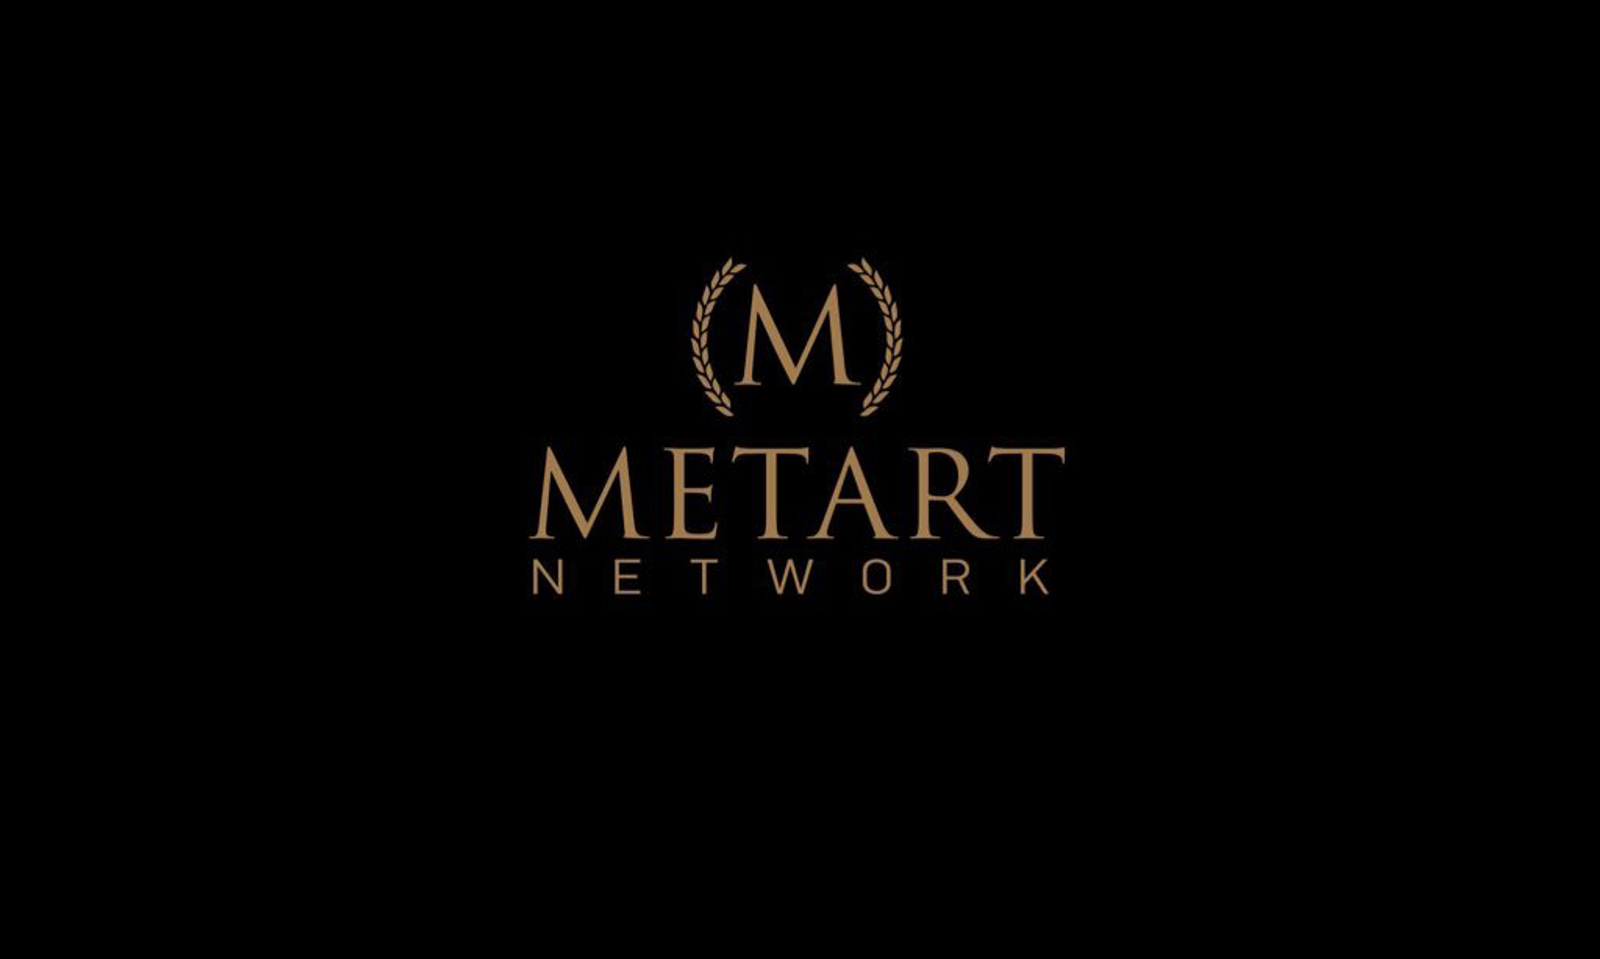 Metart network